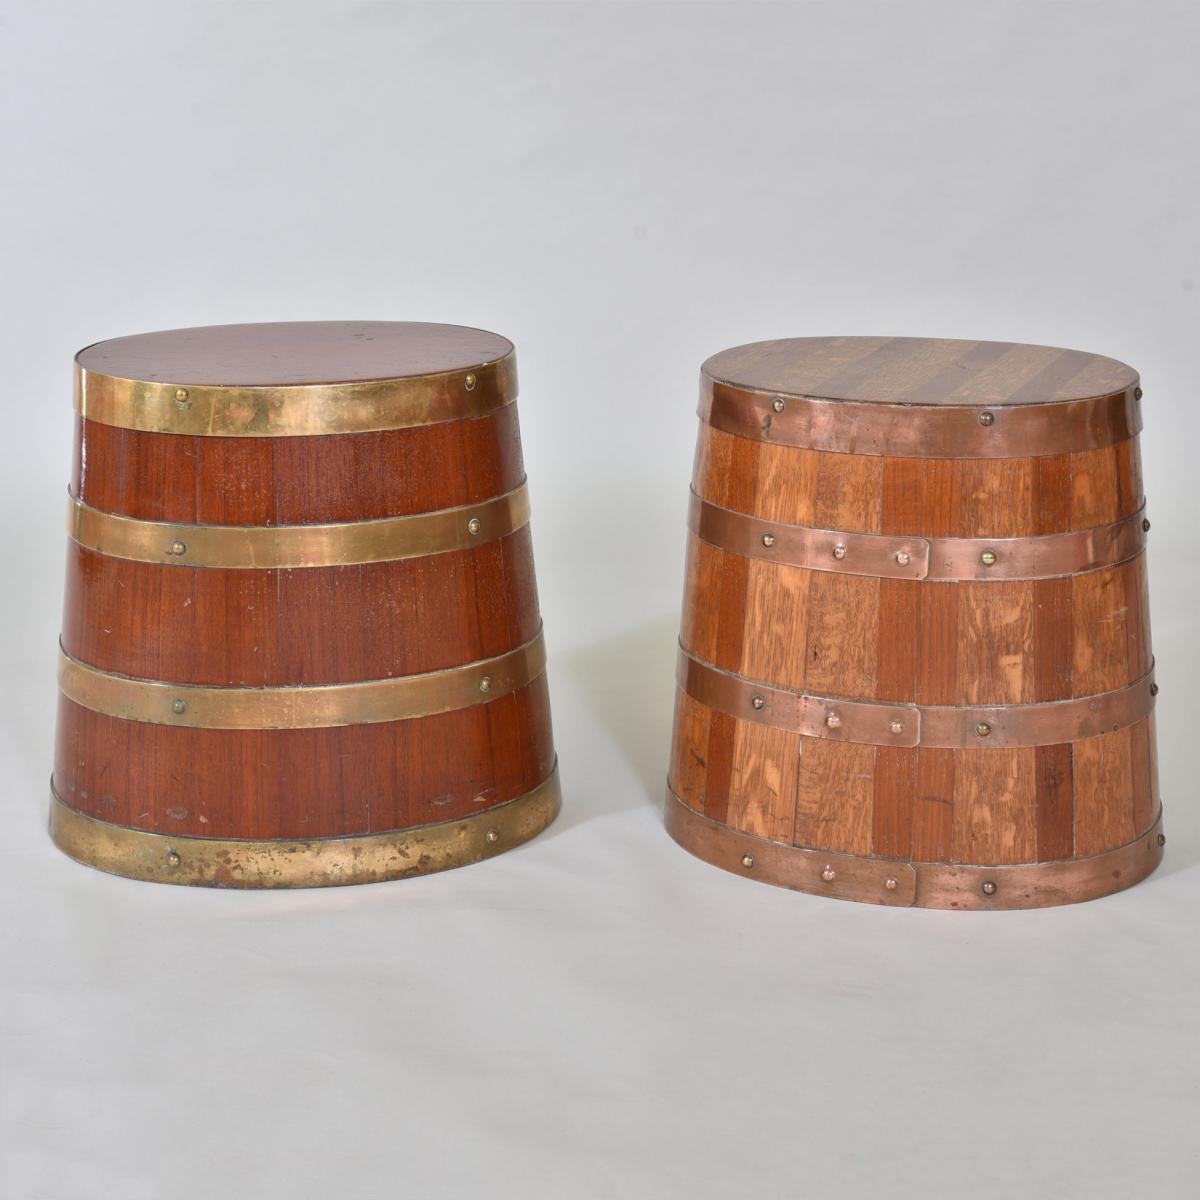 Two Similar 19th century Brass Bound Barrels